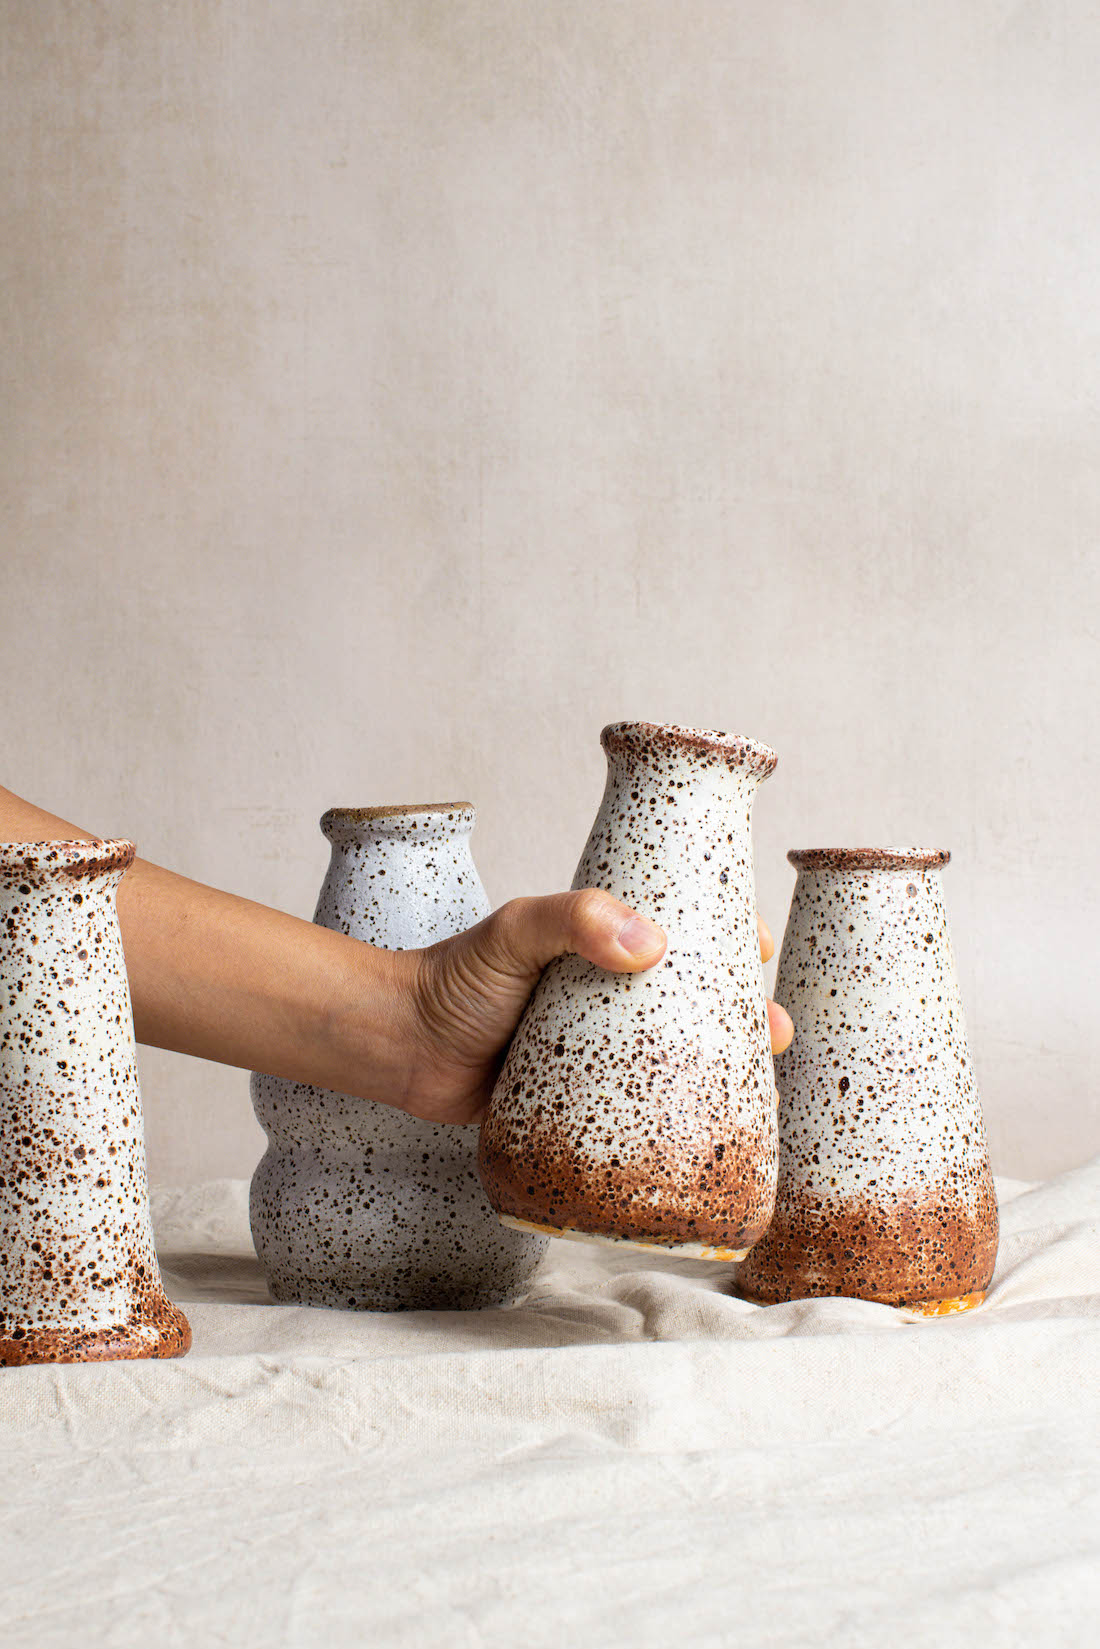 Airr Made Ceramics collection of vases